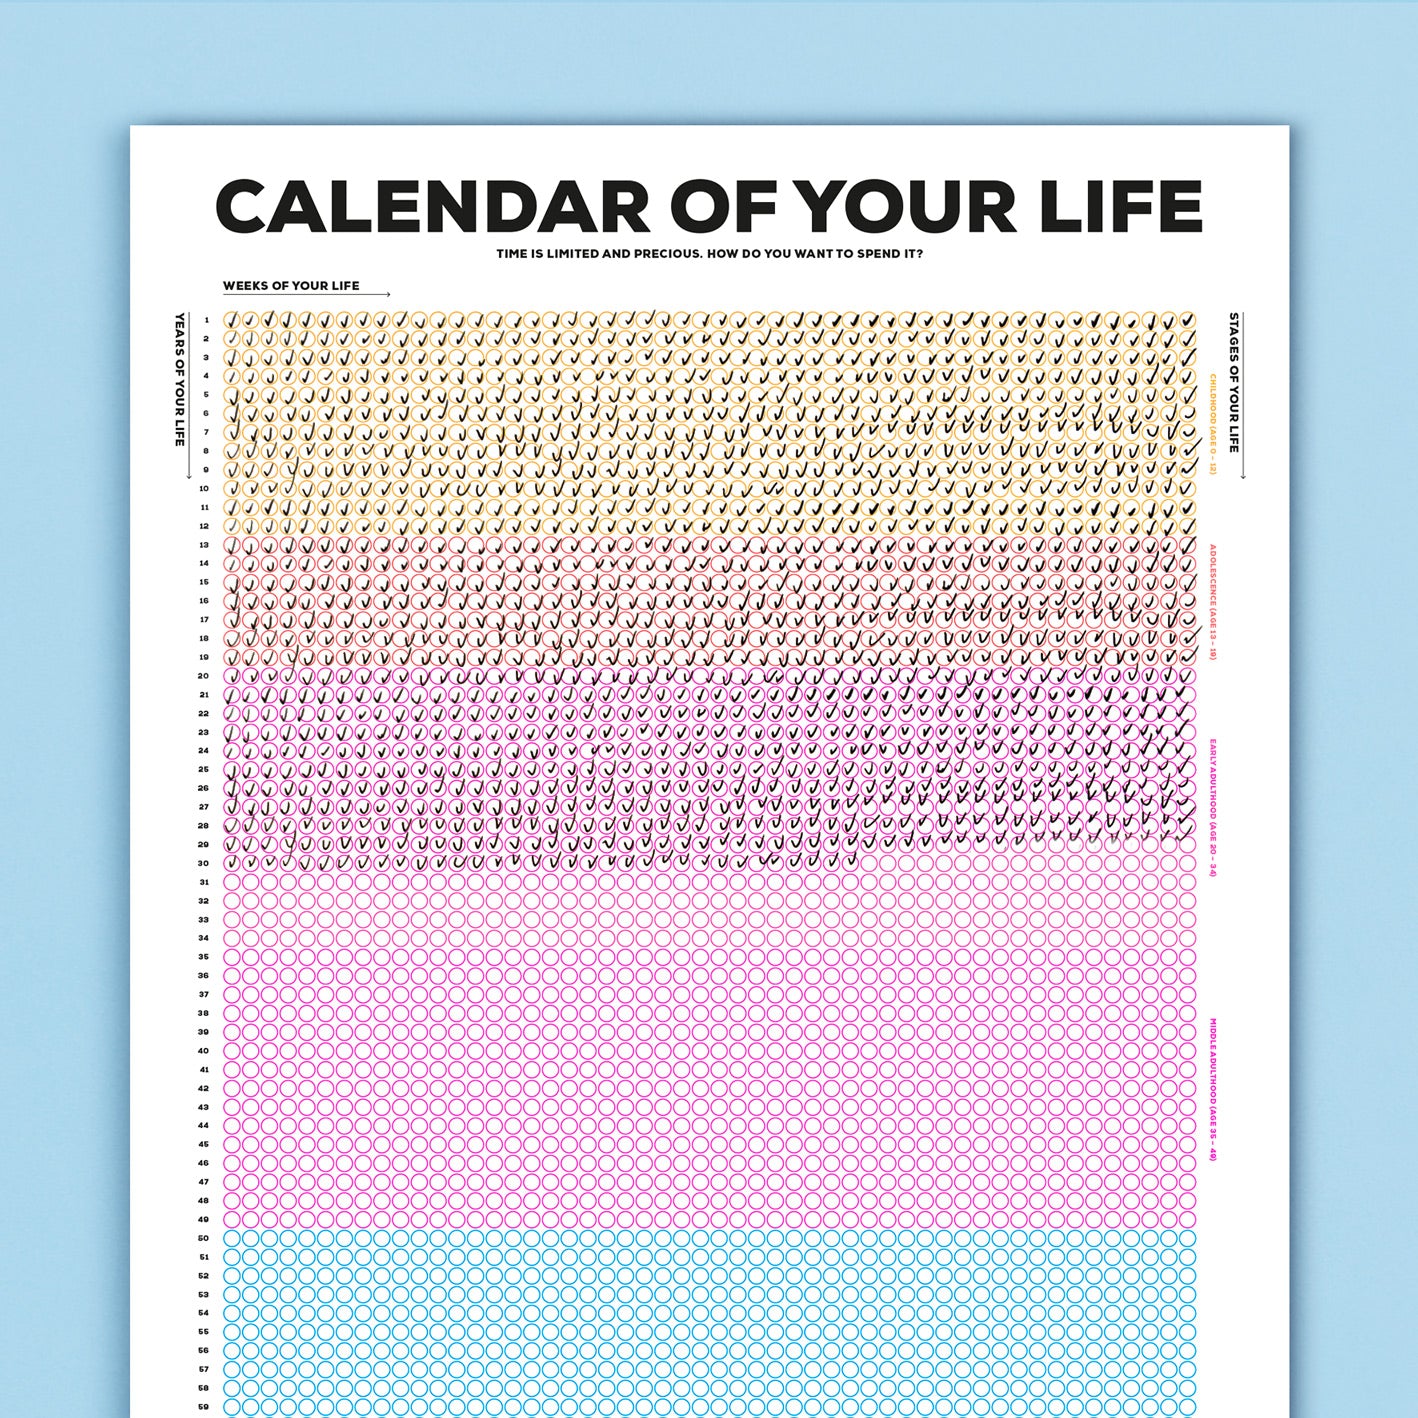 Calendar of Your Life Infographic Poster (Neon) the kurzgesagt shop